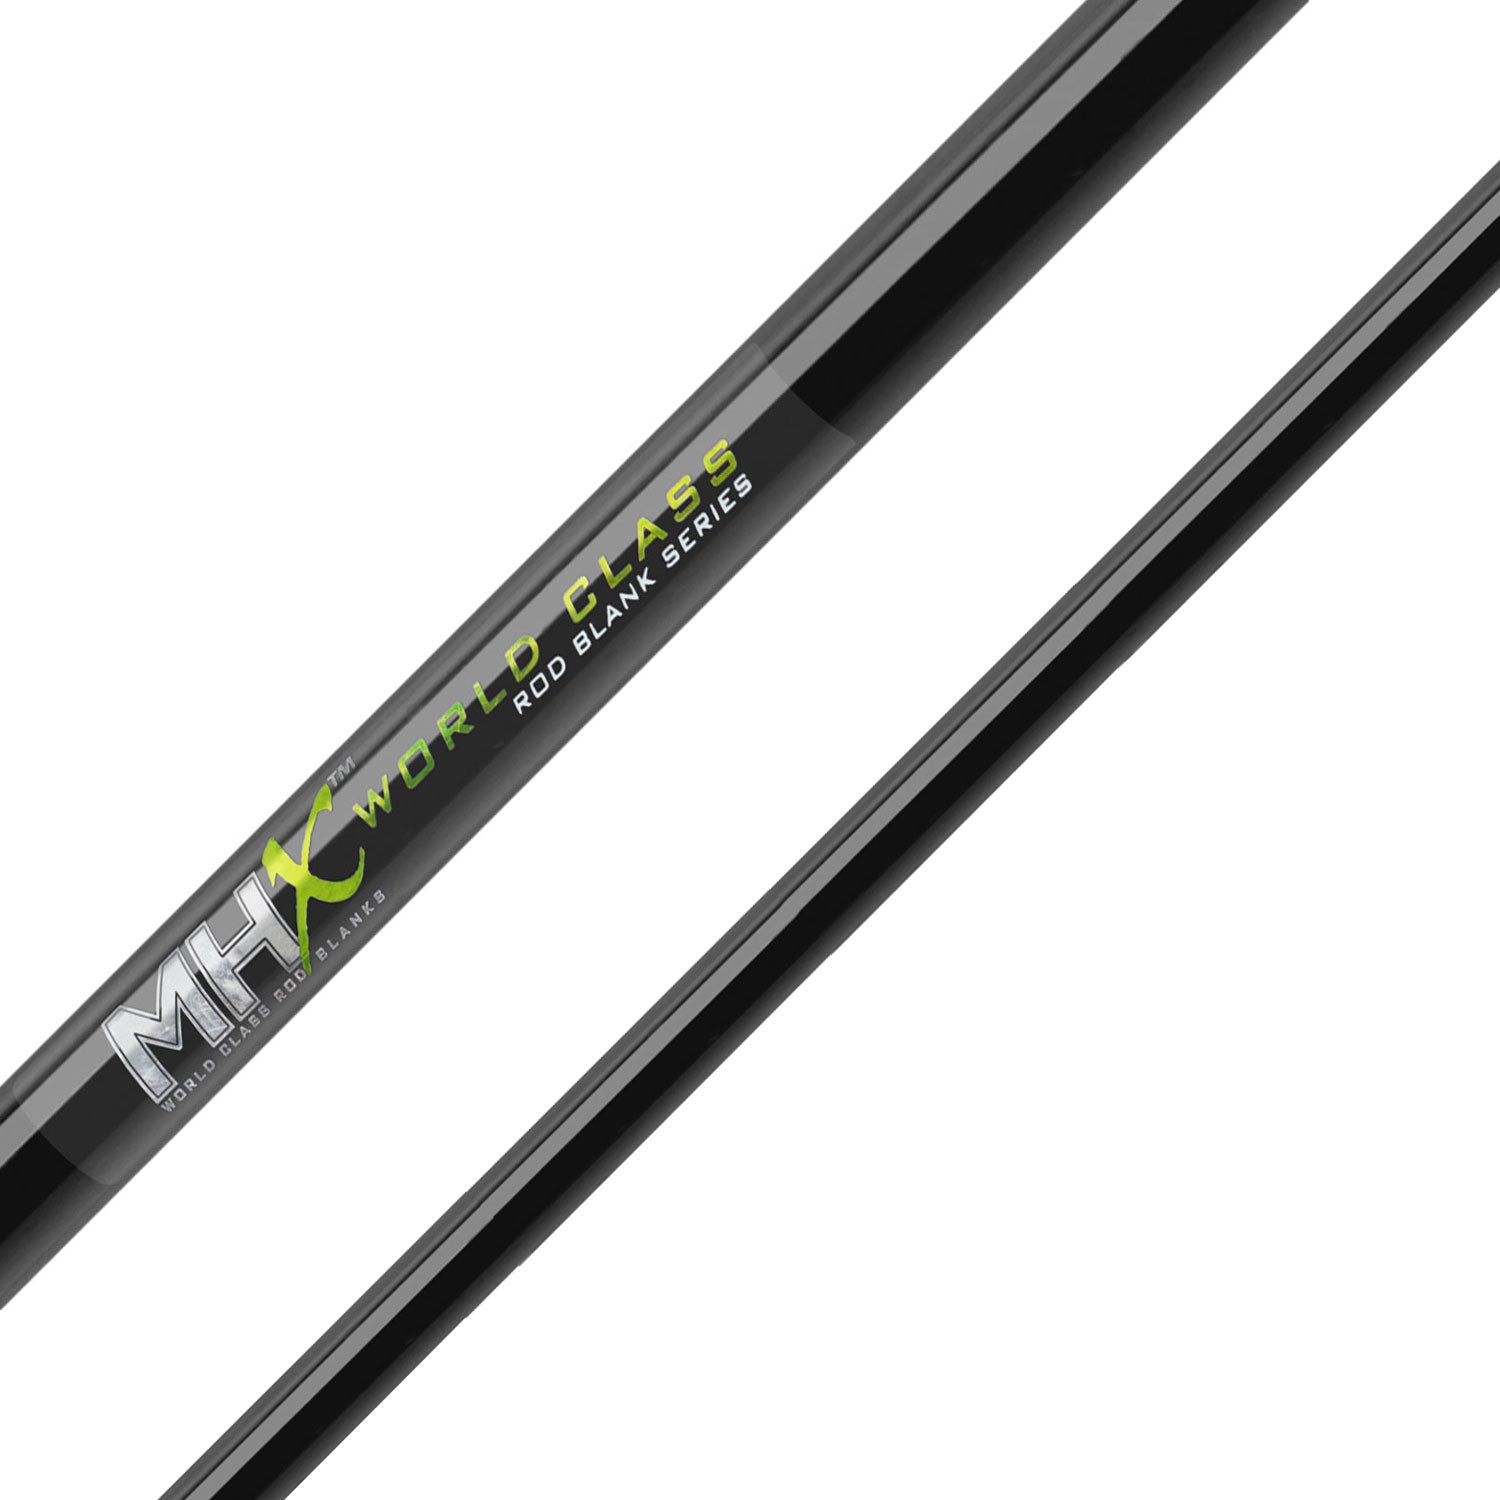 MHX 7'6" Heavy Light Saltwater Rod Blank - L905-2-MHX